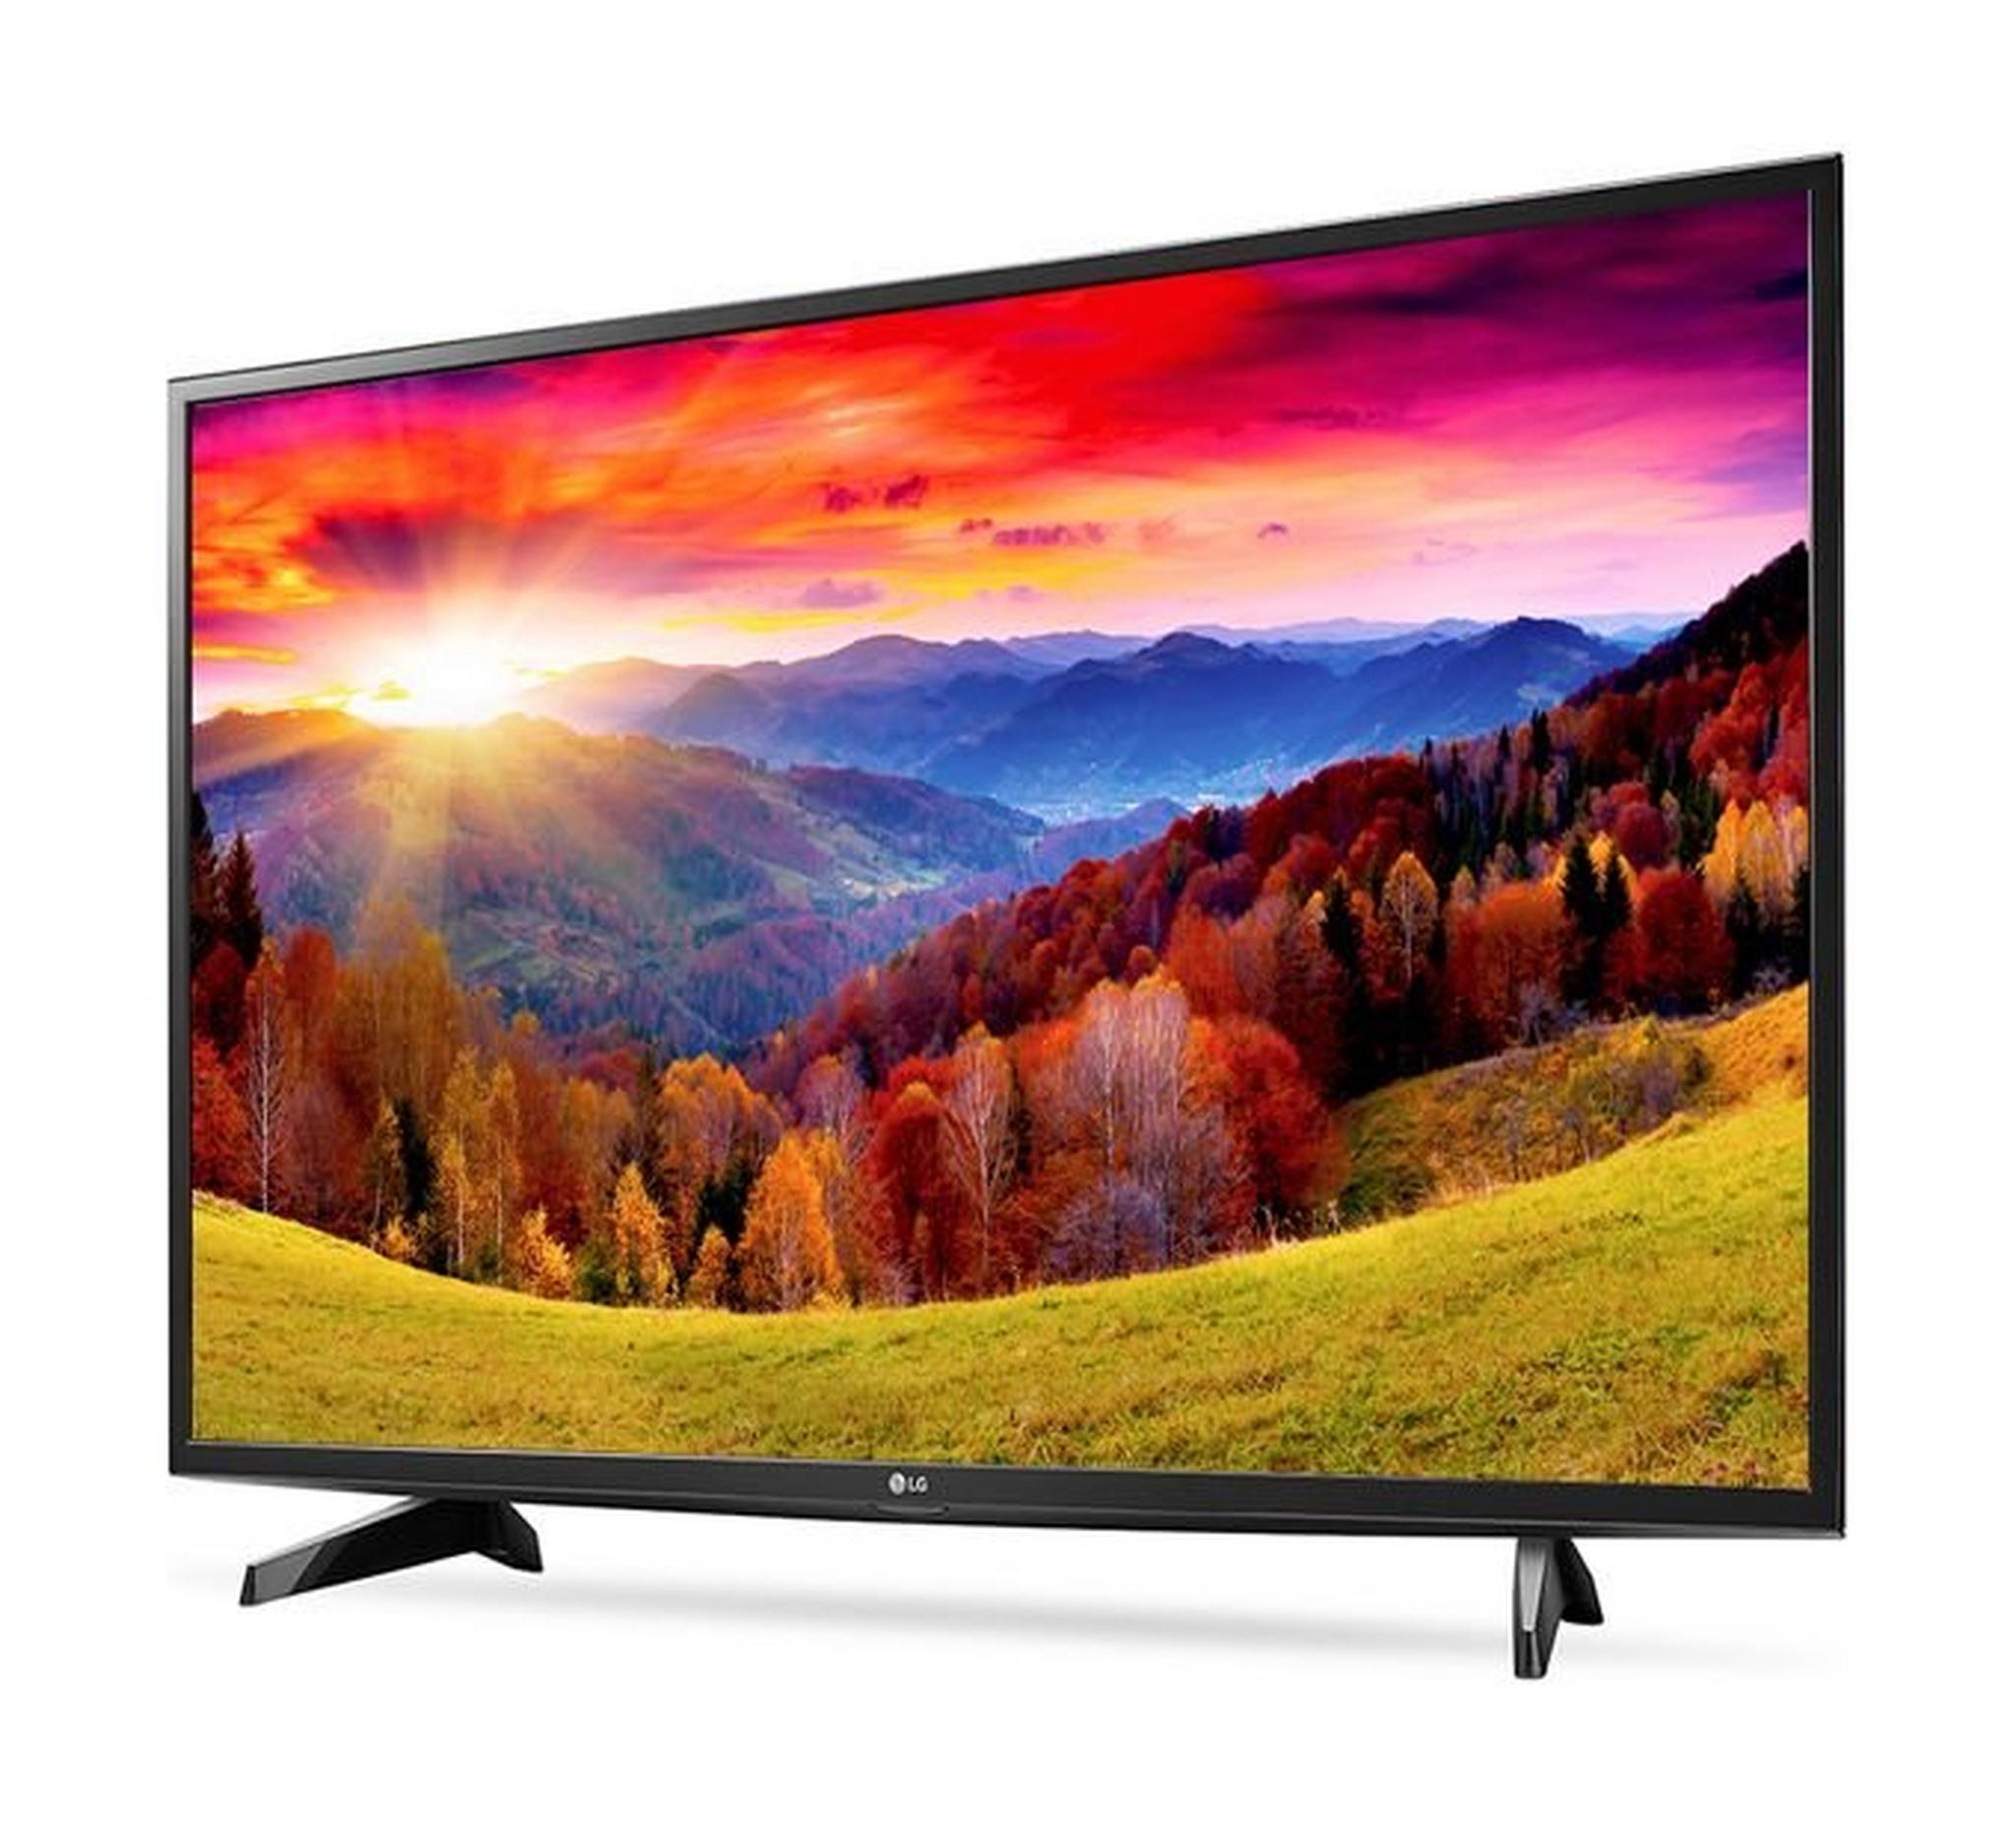 LG 55-inch Full HD (1080p) Smart LED TV – 55LH595V